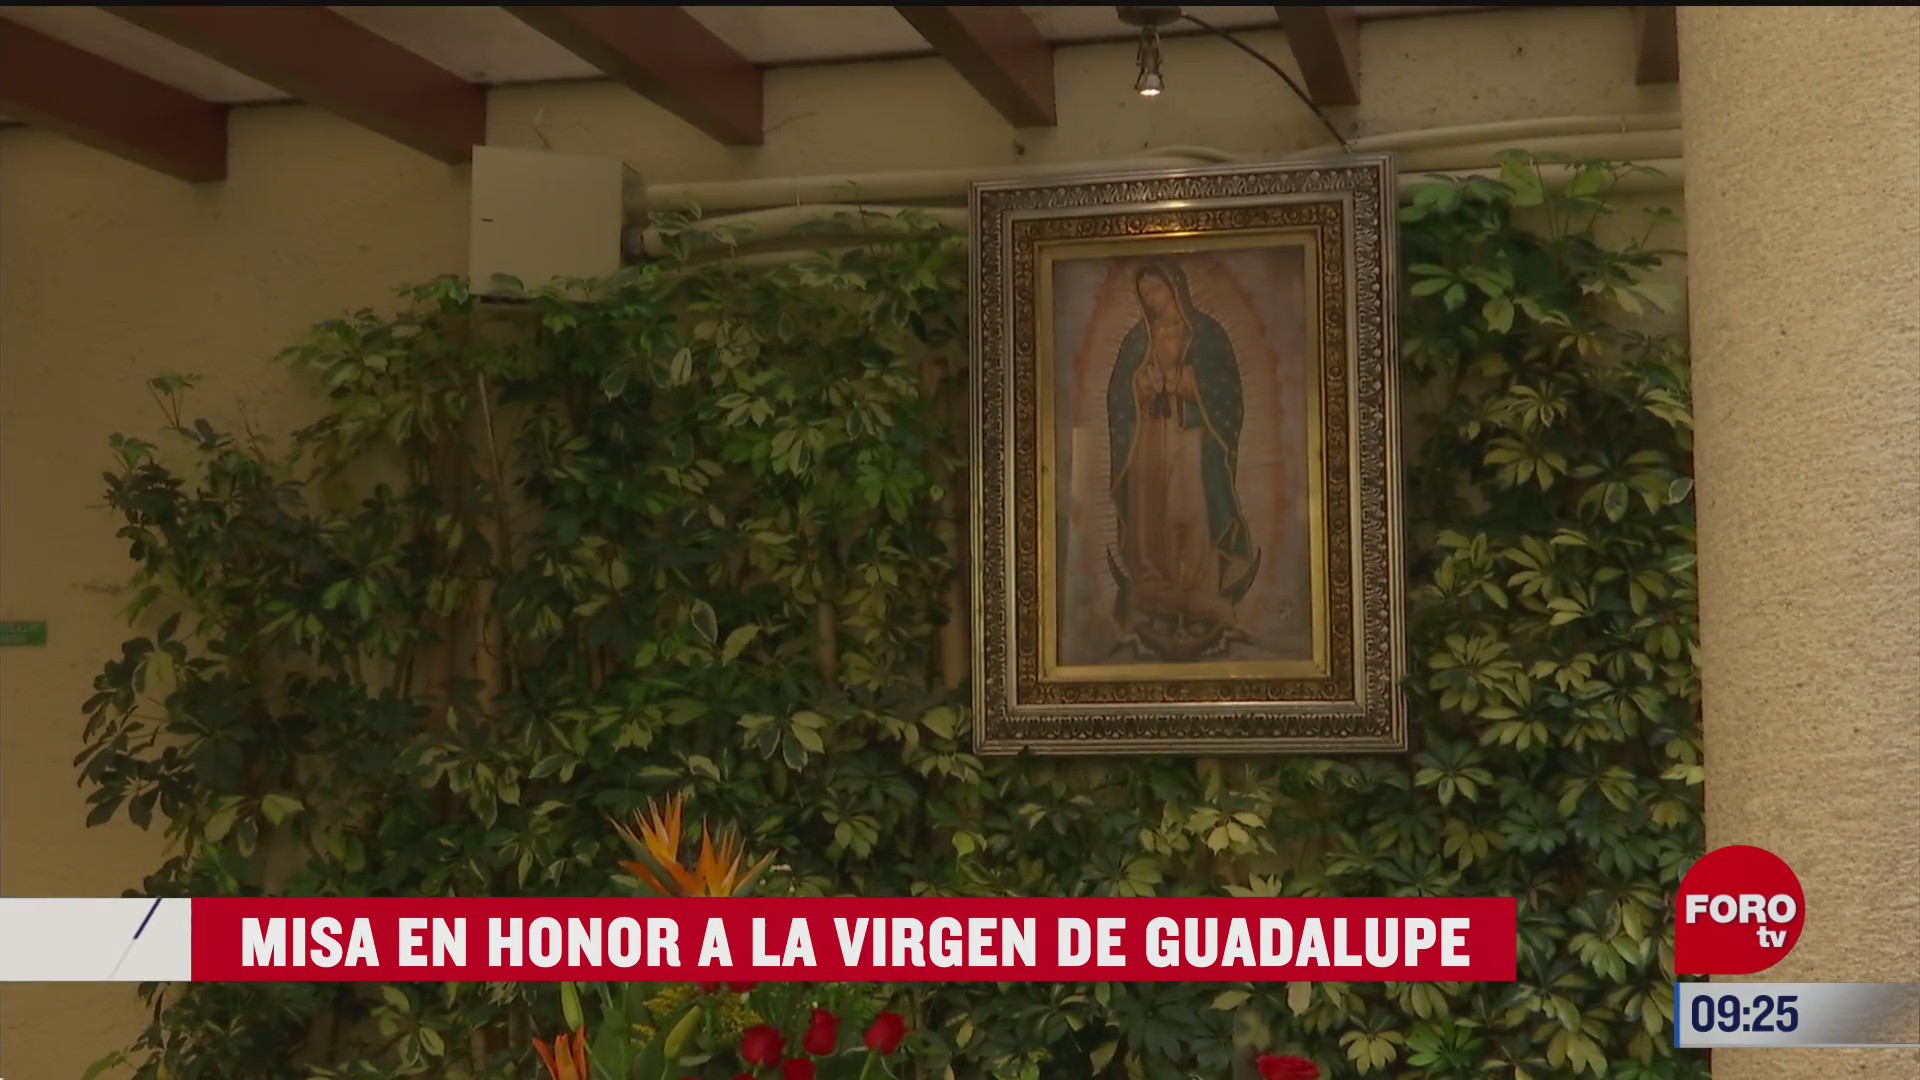 misa en honor a la virgen de guadalupe en forotv